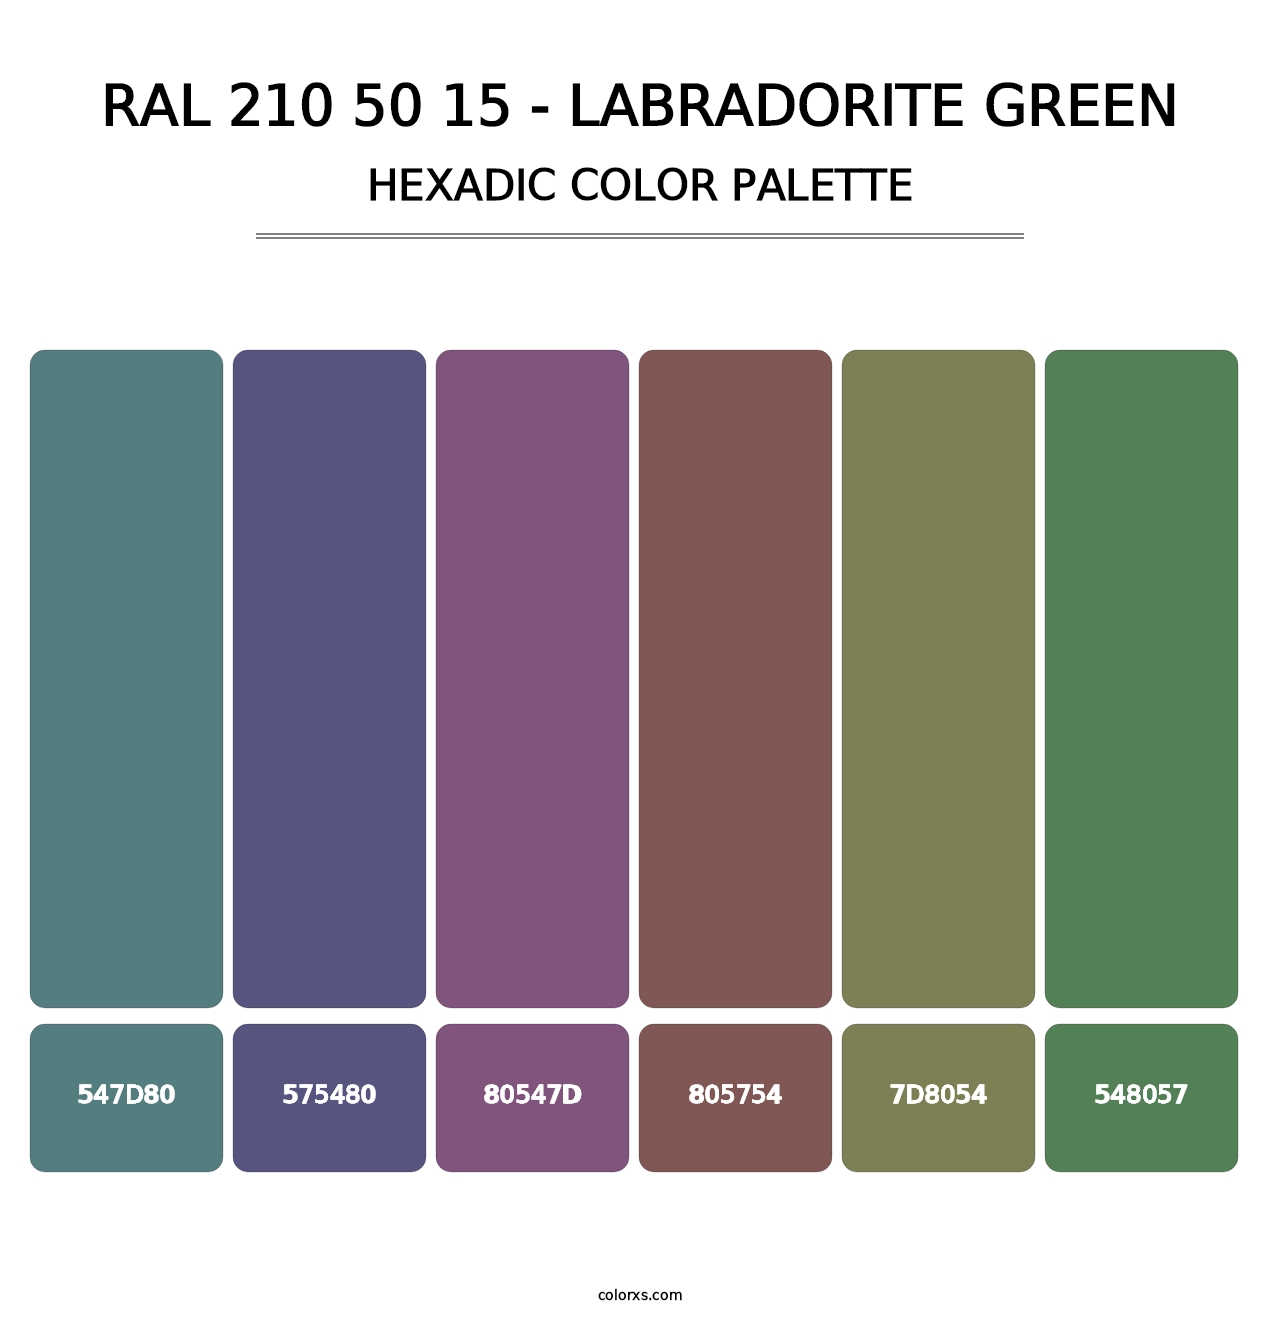 RAL 210 50 15 - Labradorite Green - Hexadic Color Palette